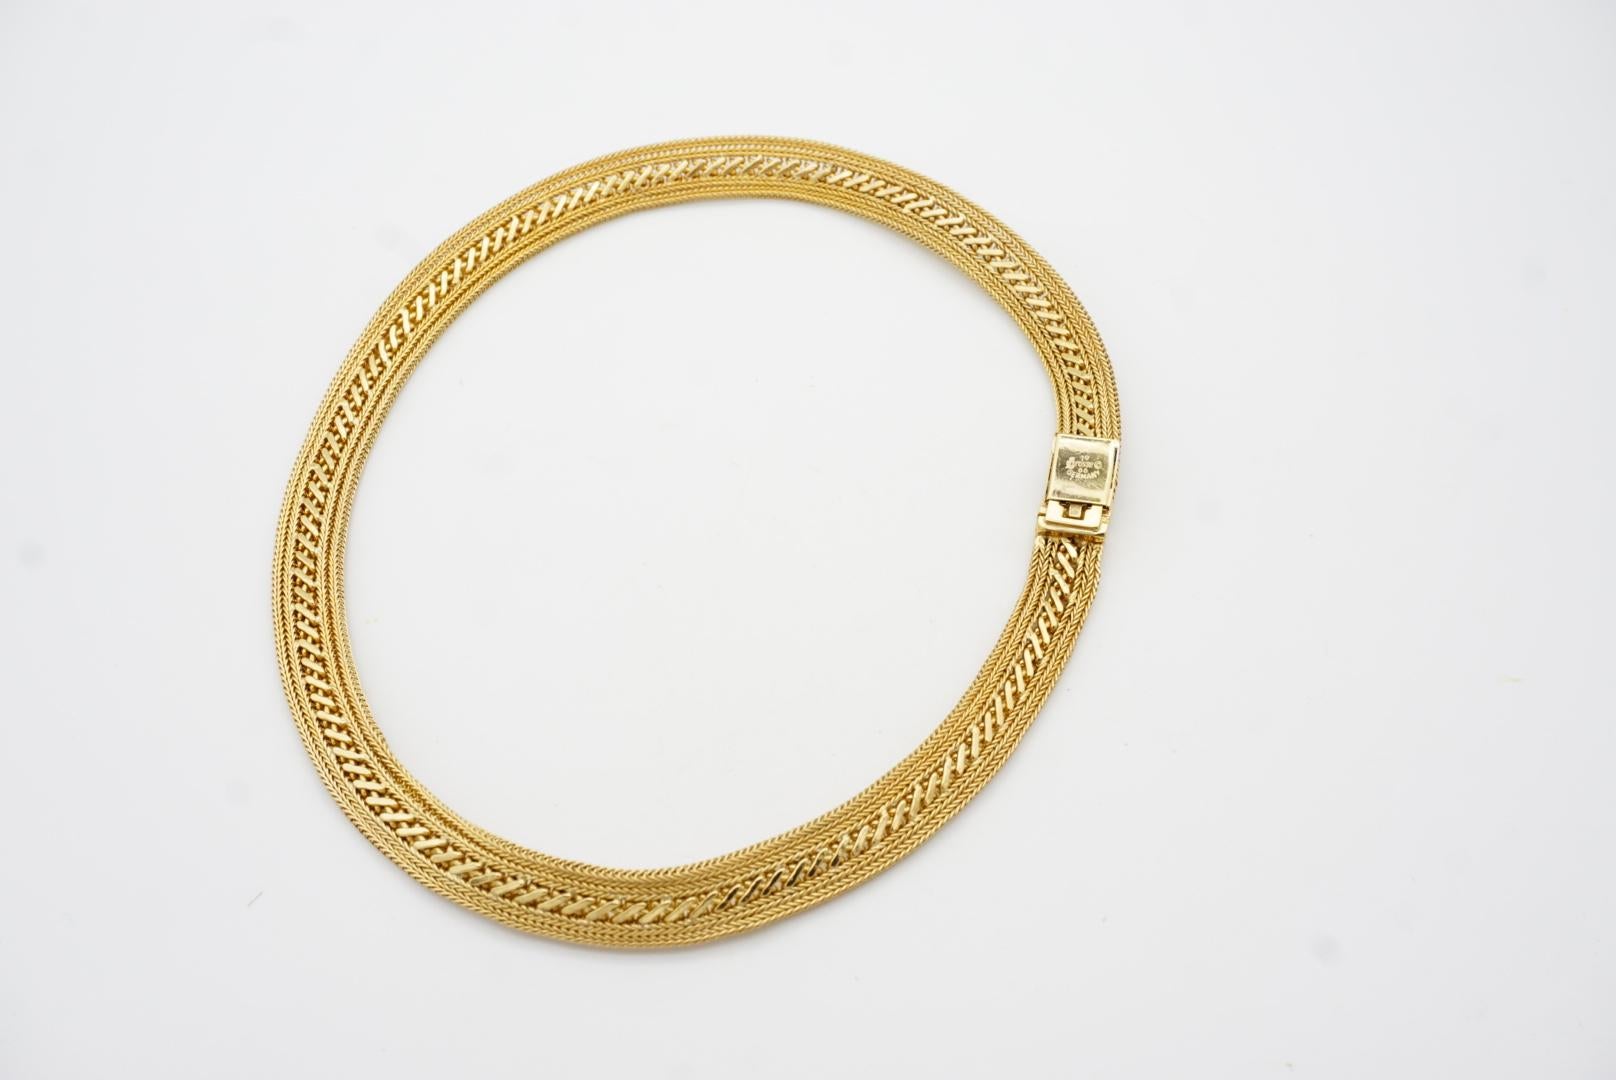 Christian Dior GROSSE 1966 Vintage Interlock Woven Herringbone Openwork Necklace 7